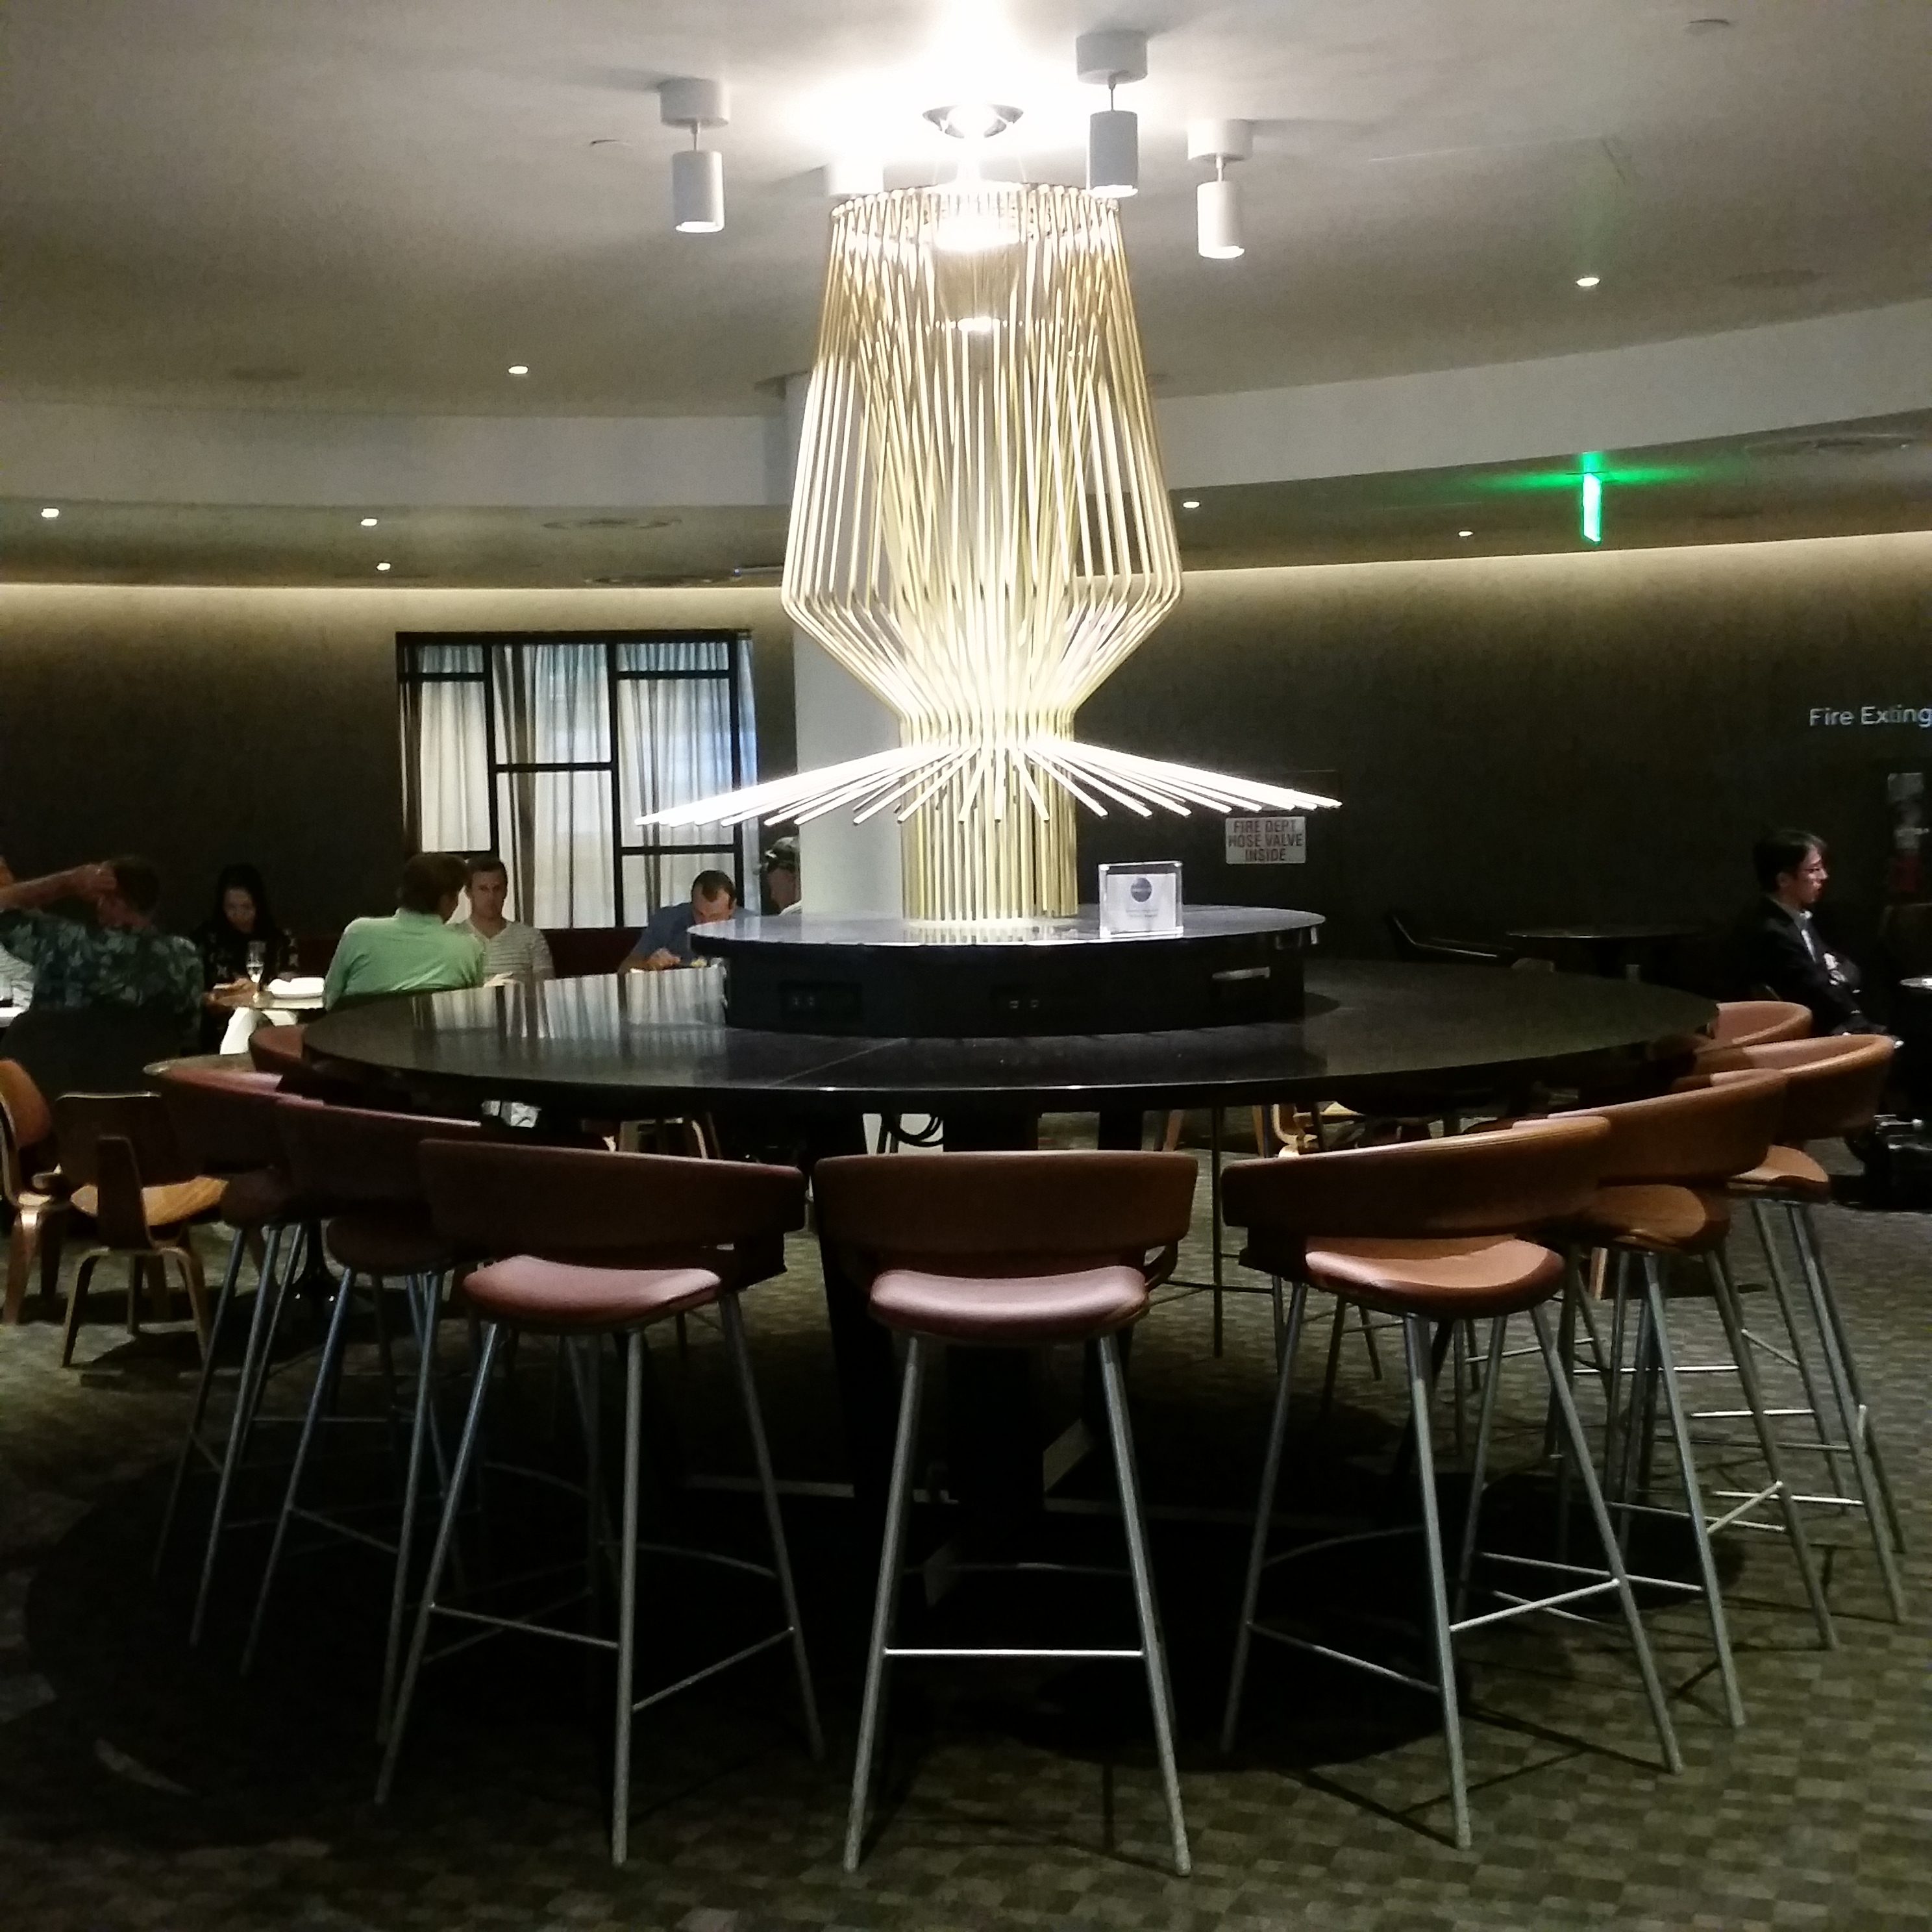 Qantas LAX lounge review communal table | Point Hacks